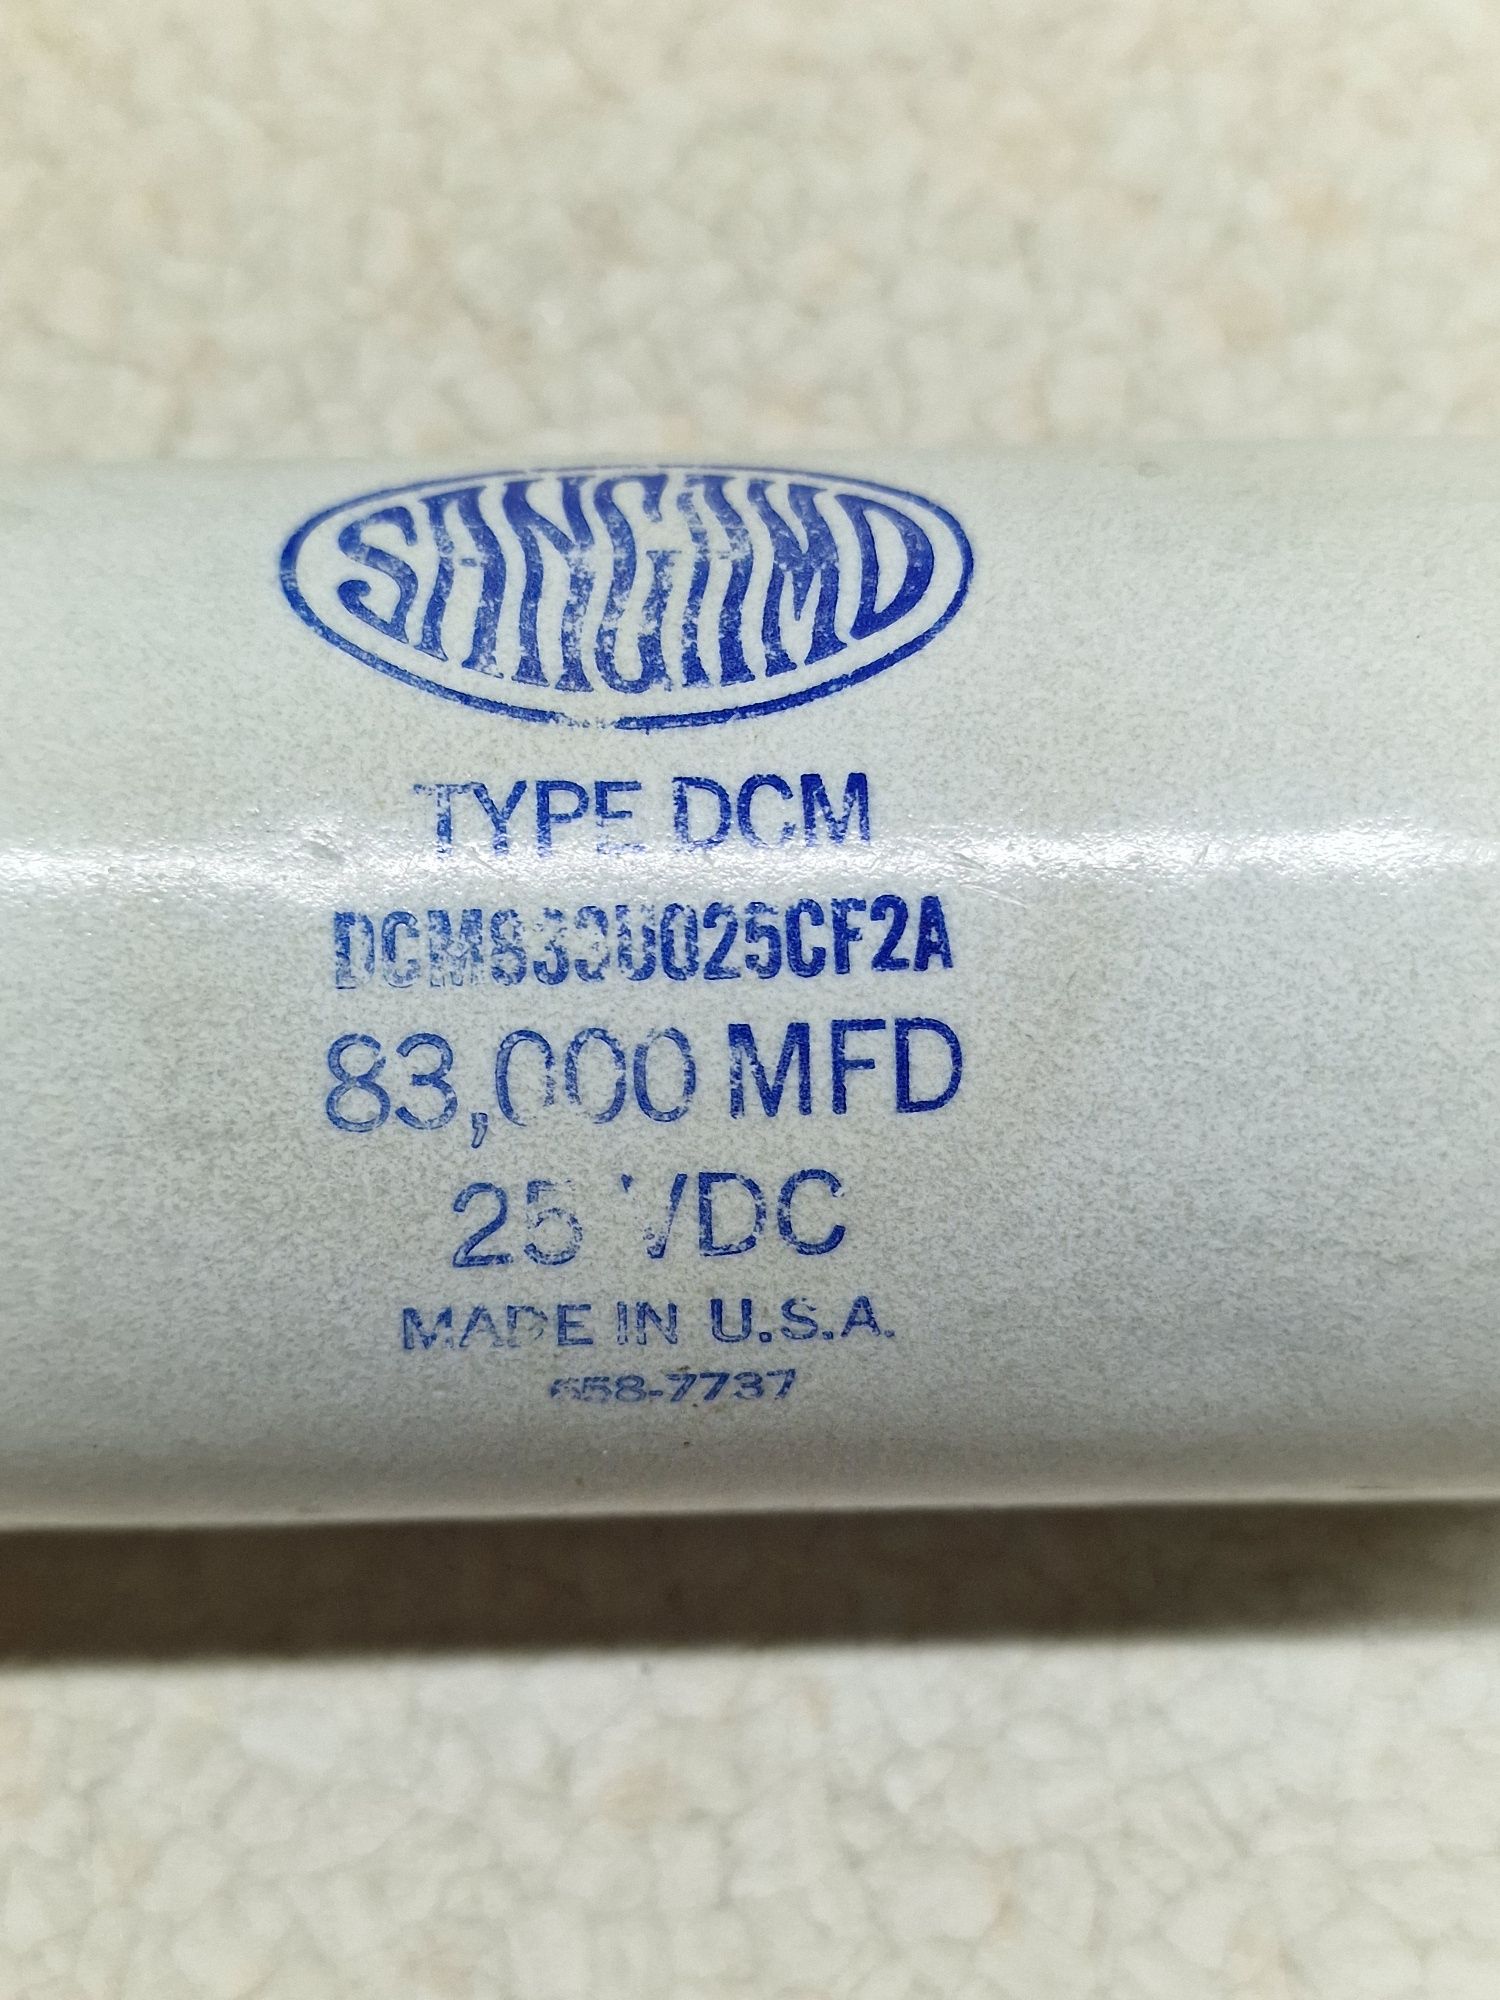 Kondensator Type DCM 833U025CF2A